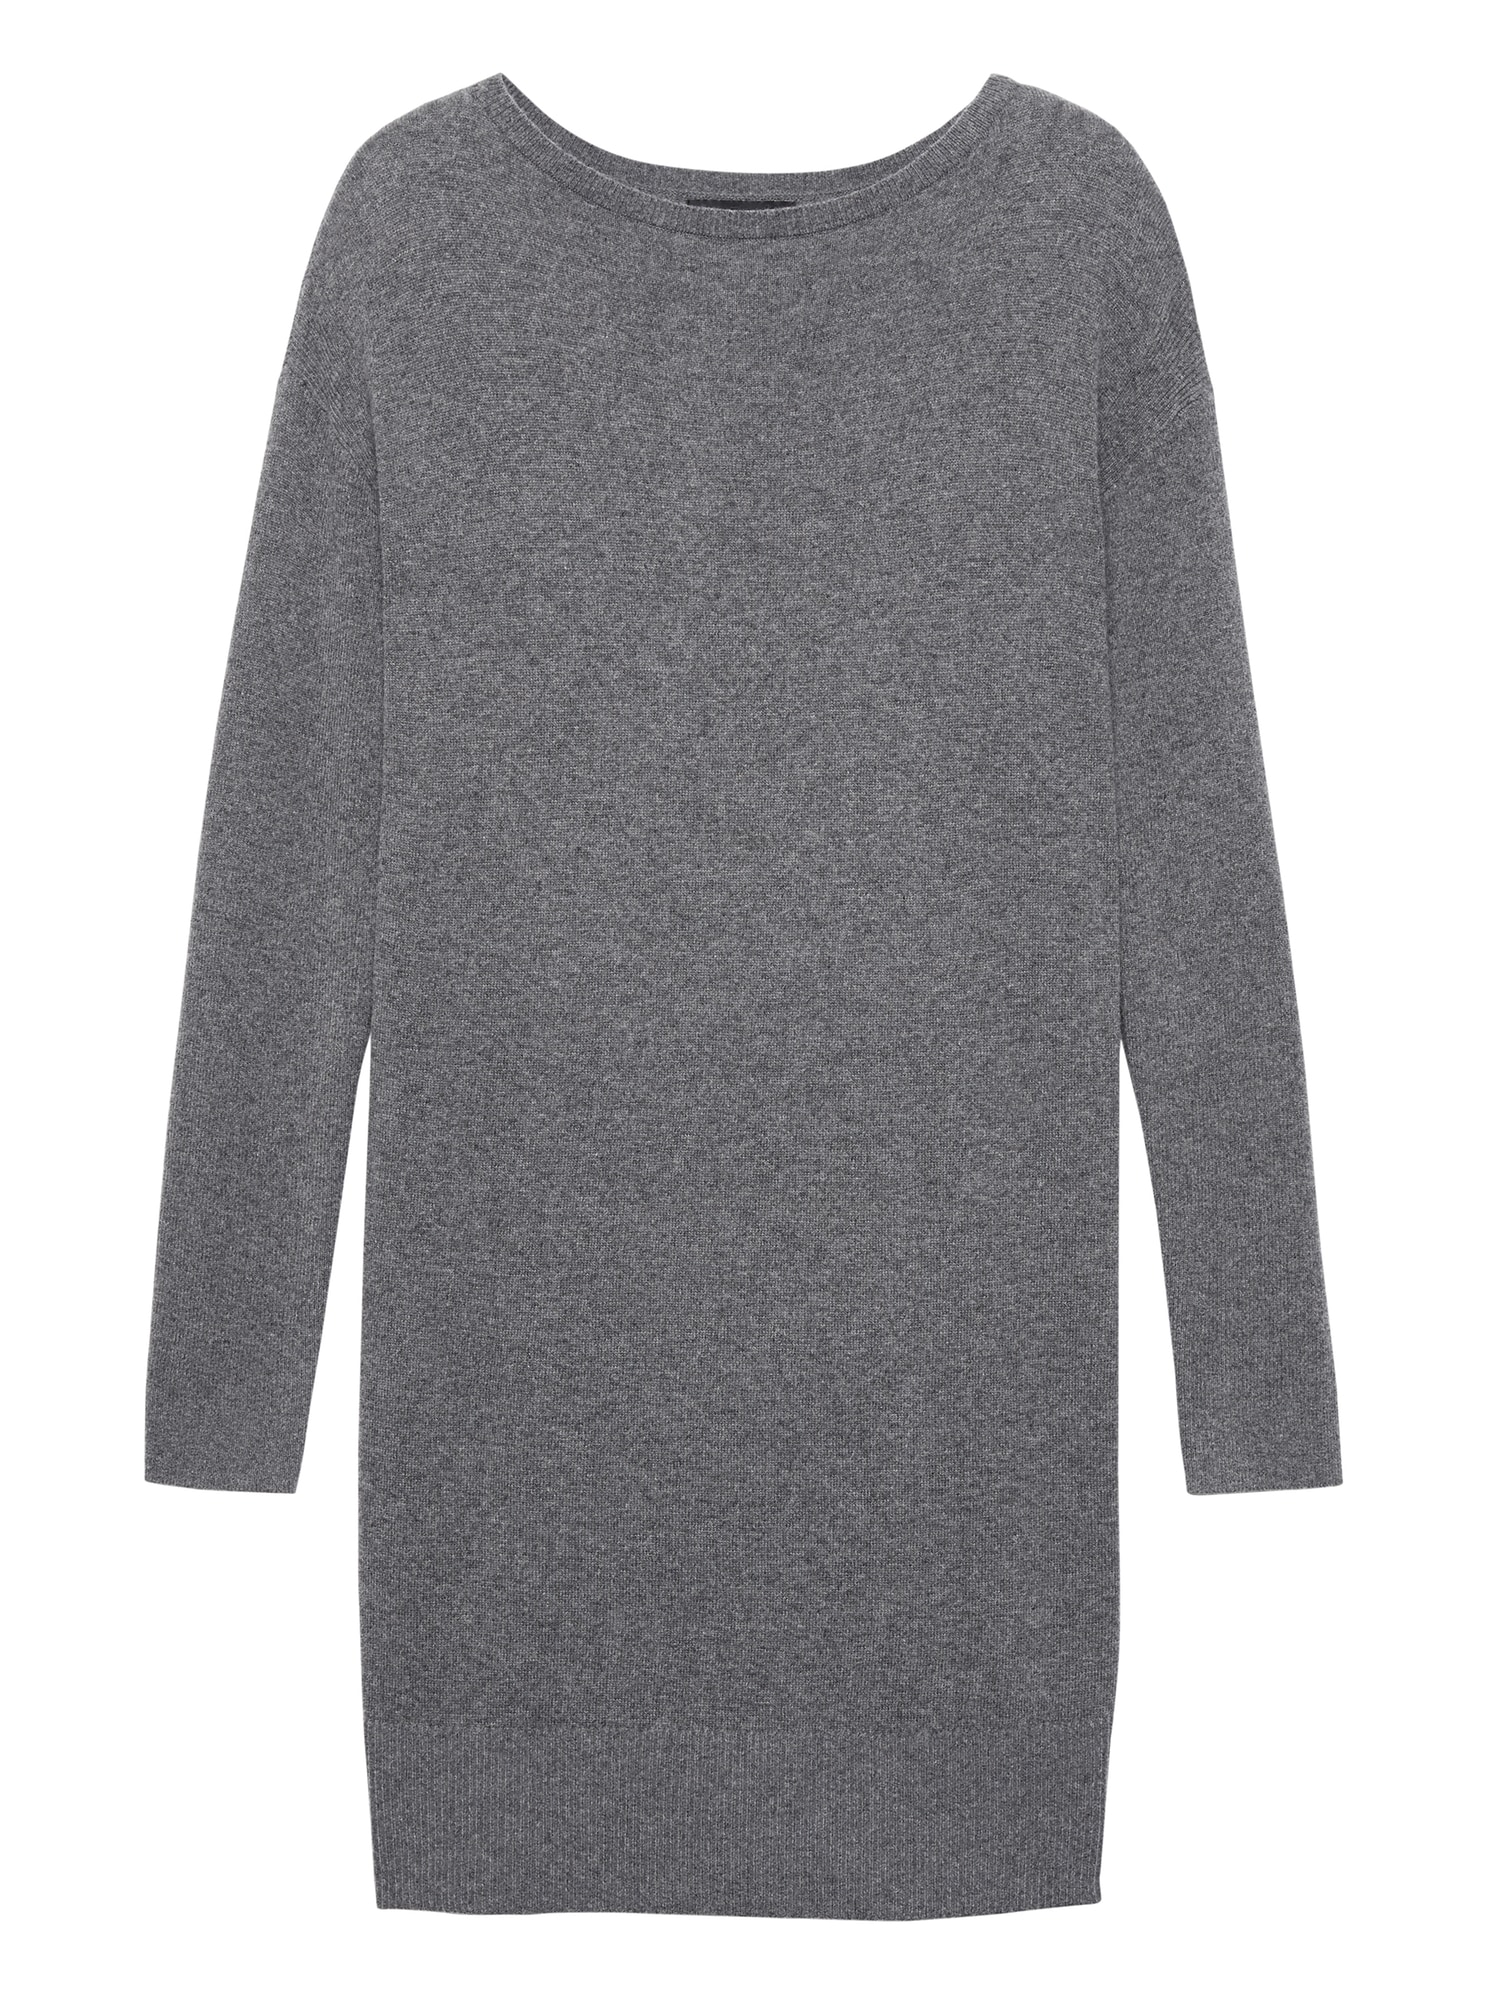 Petite Wool-Cashmere Blend Boat-Neck Sweater Dress